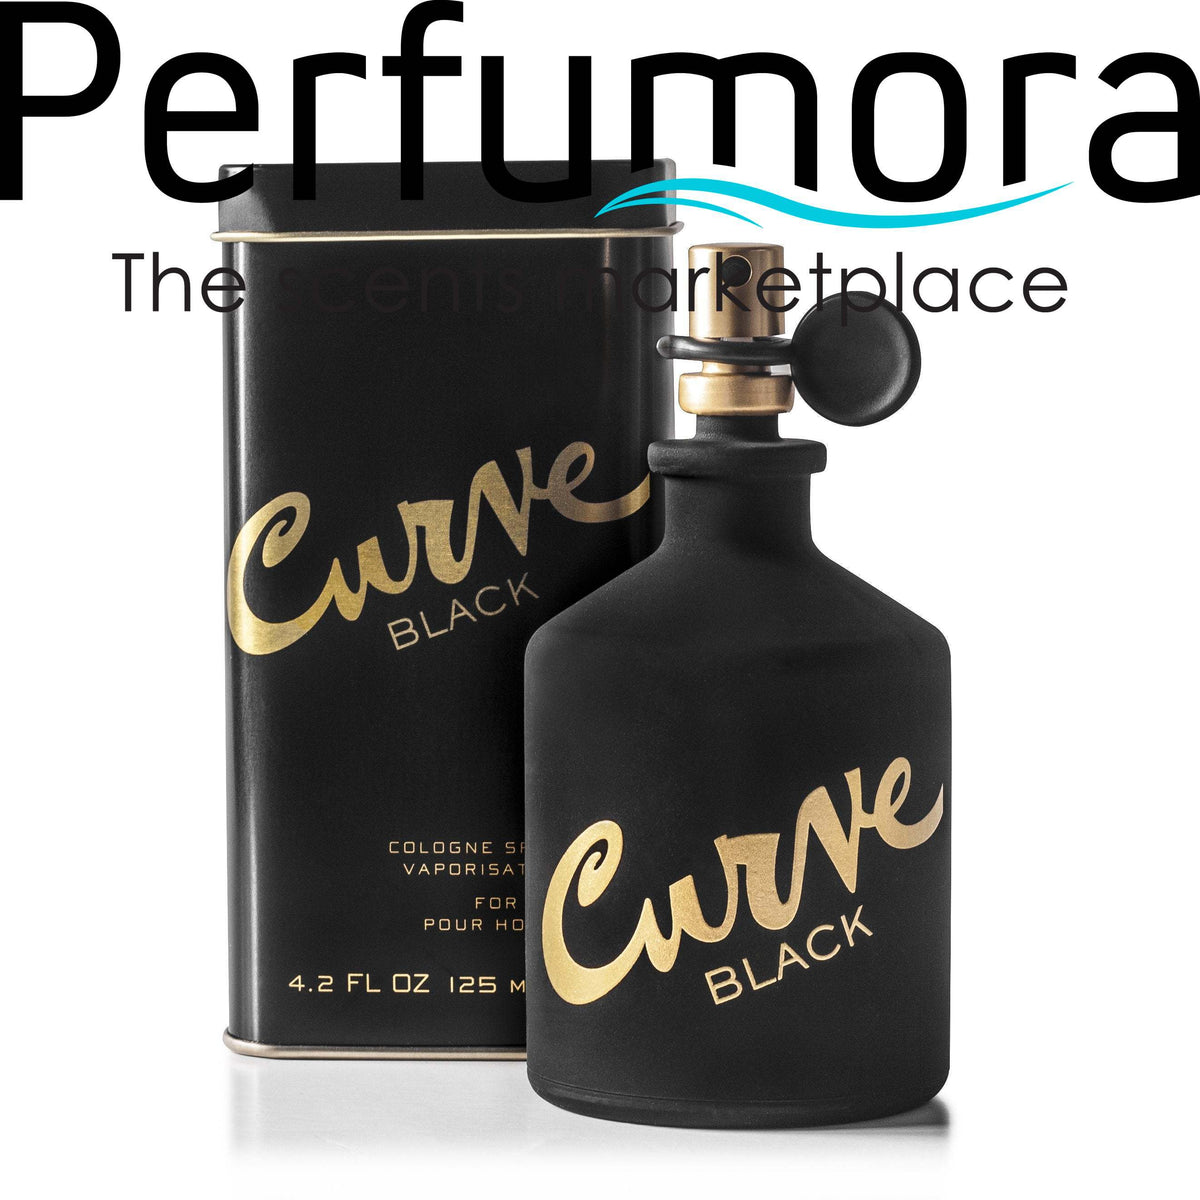 Curve Black Cologne Spray for Men by Claiborne 4.2 oz.